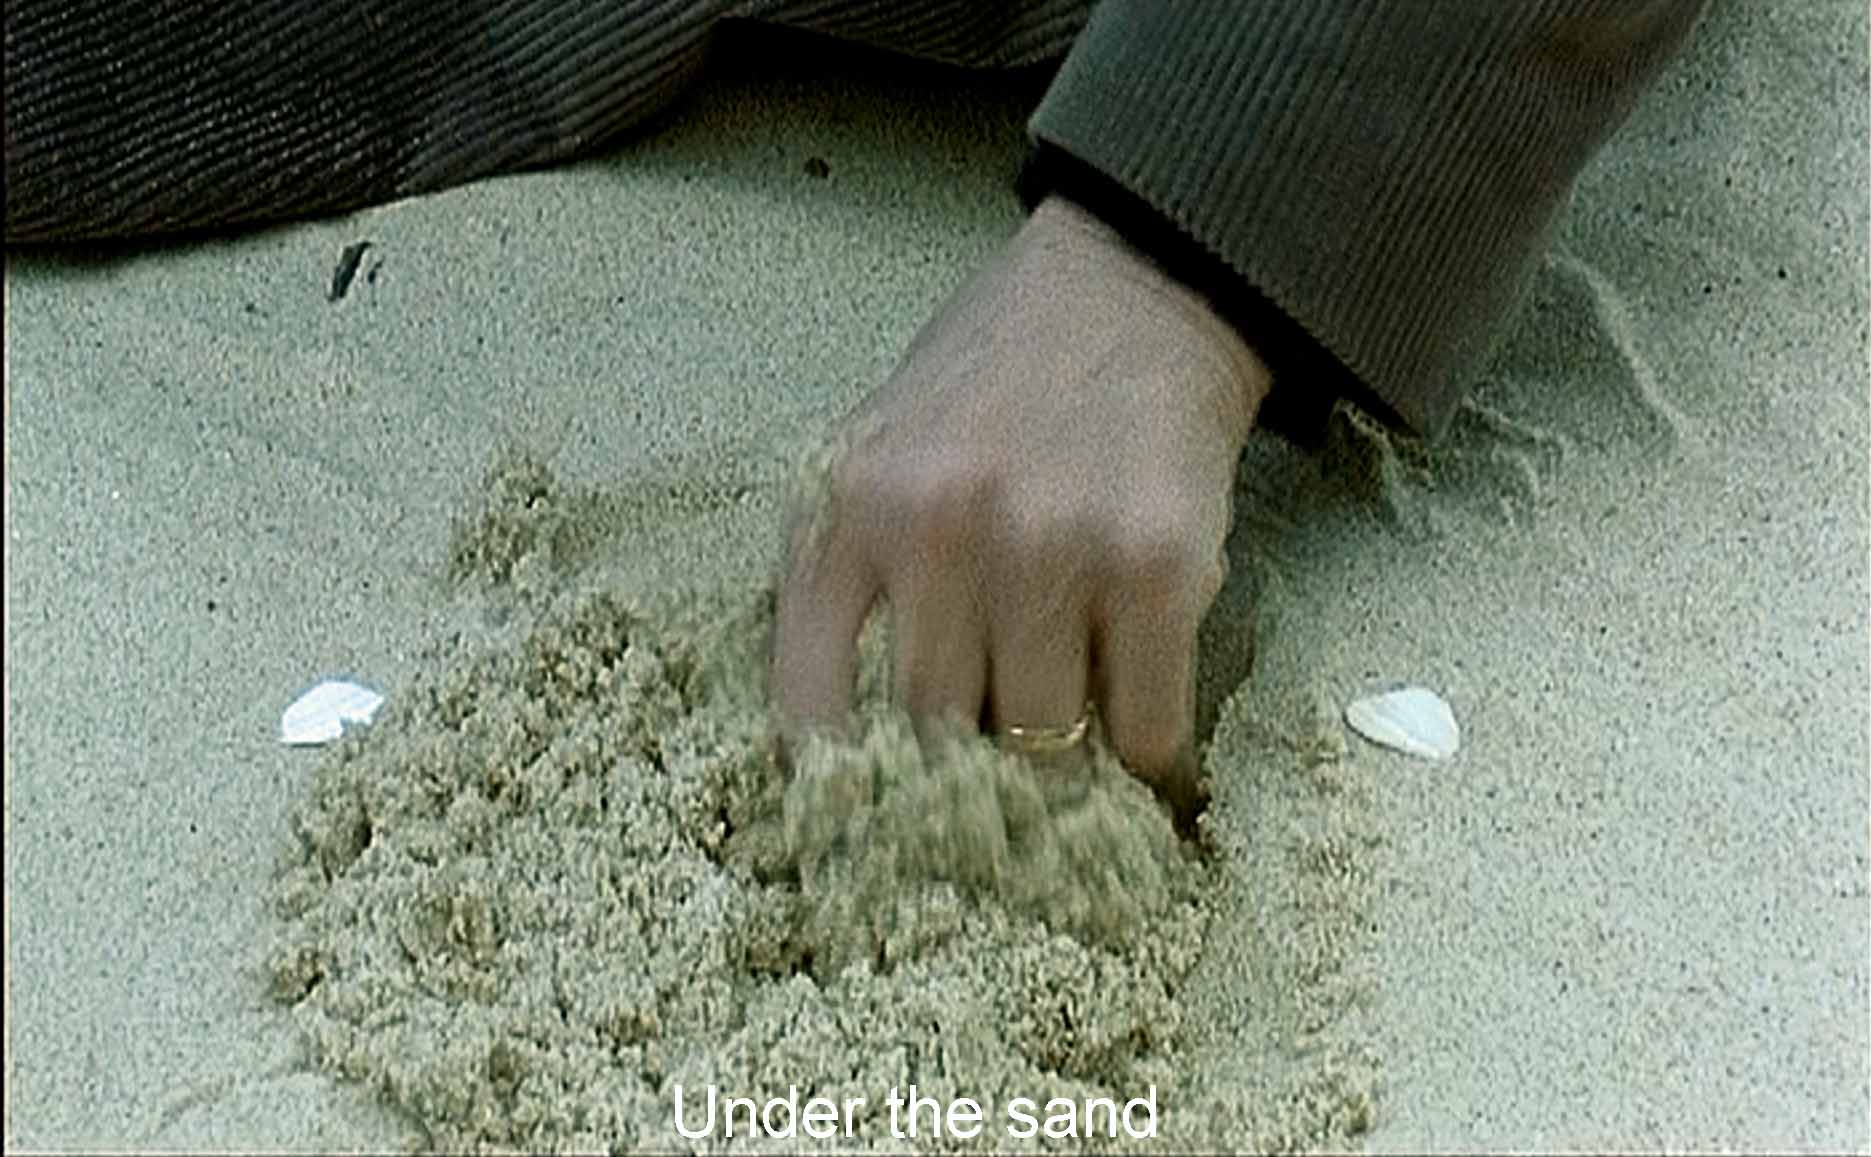 Under the sand